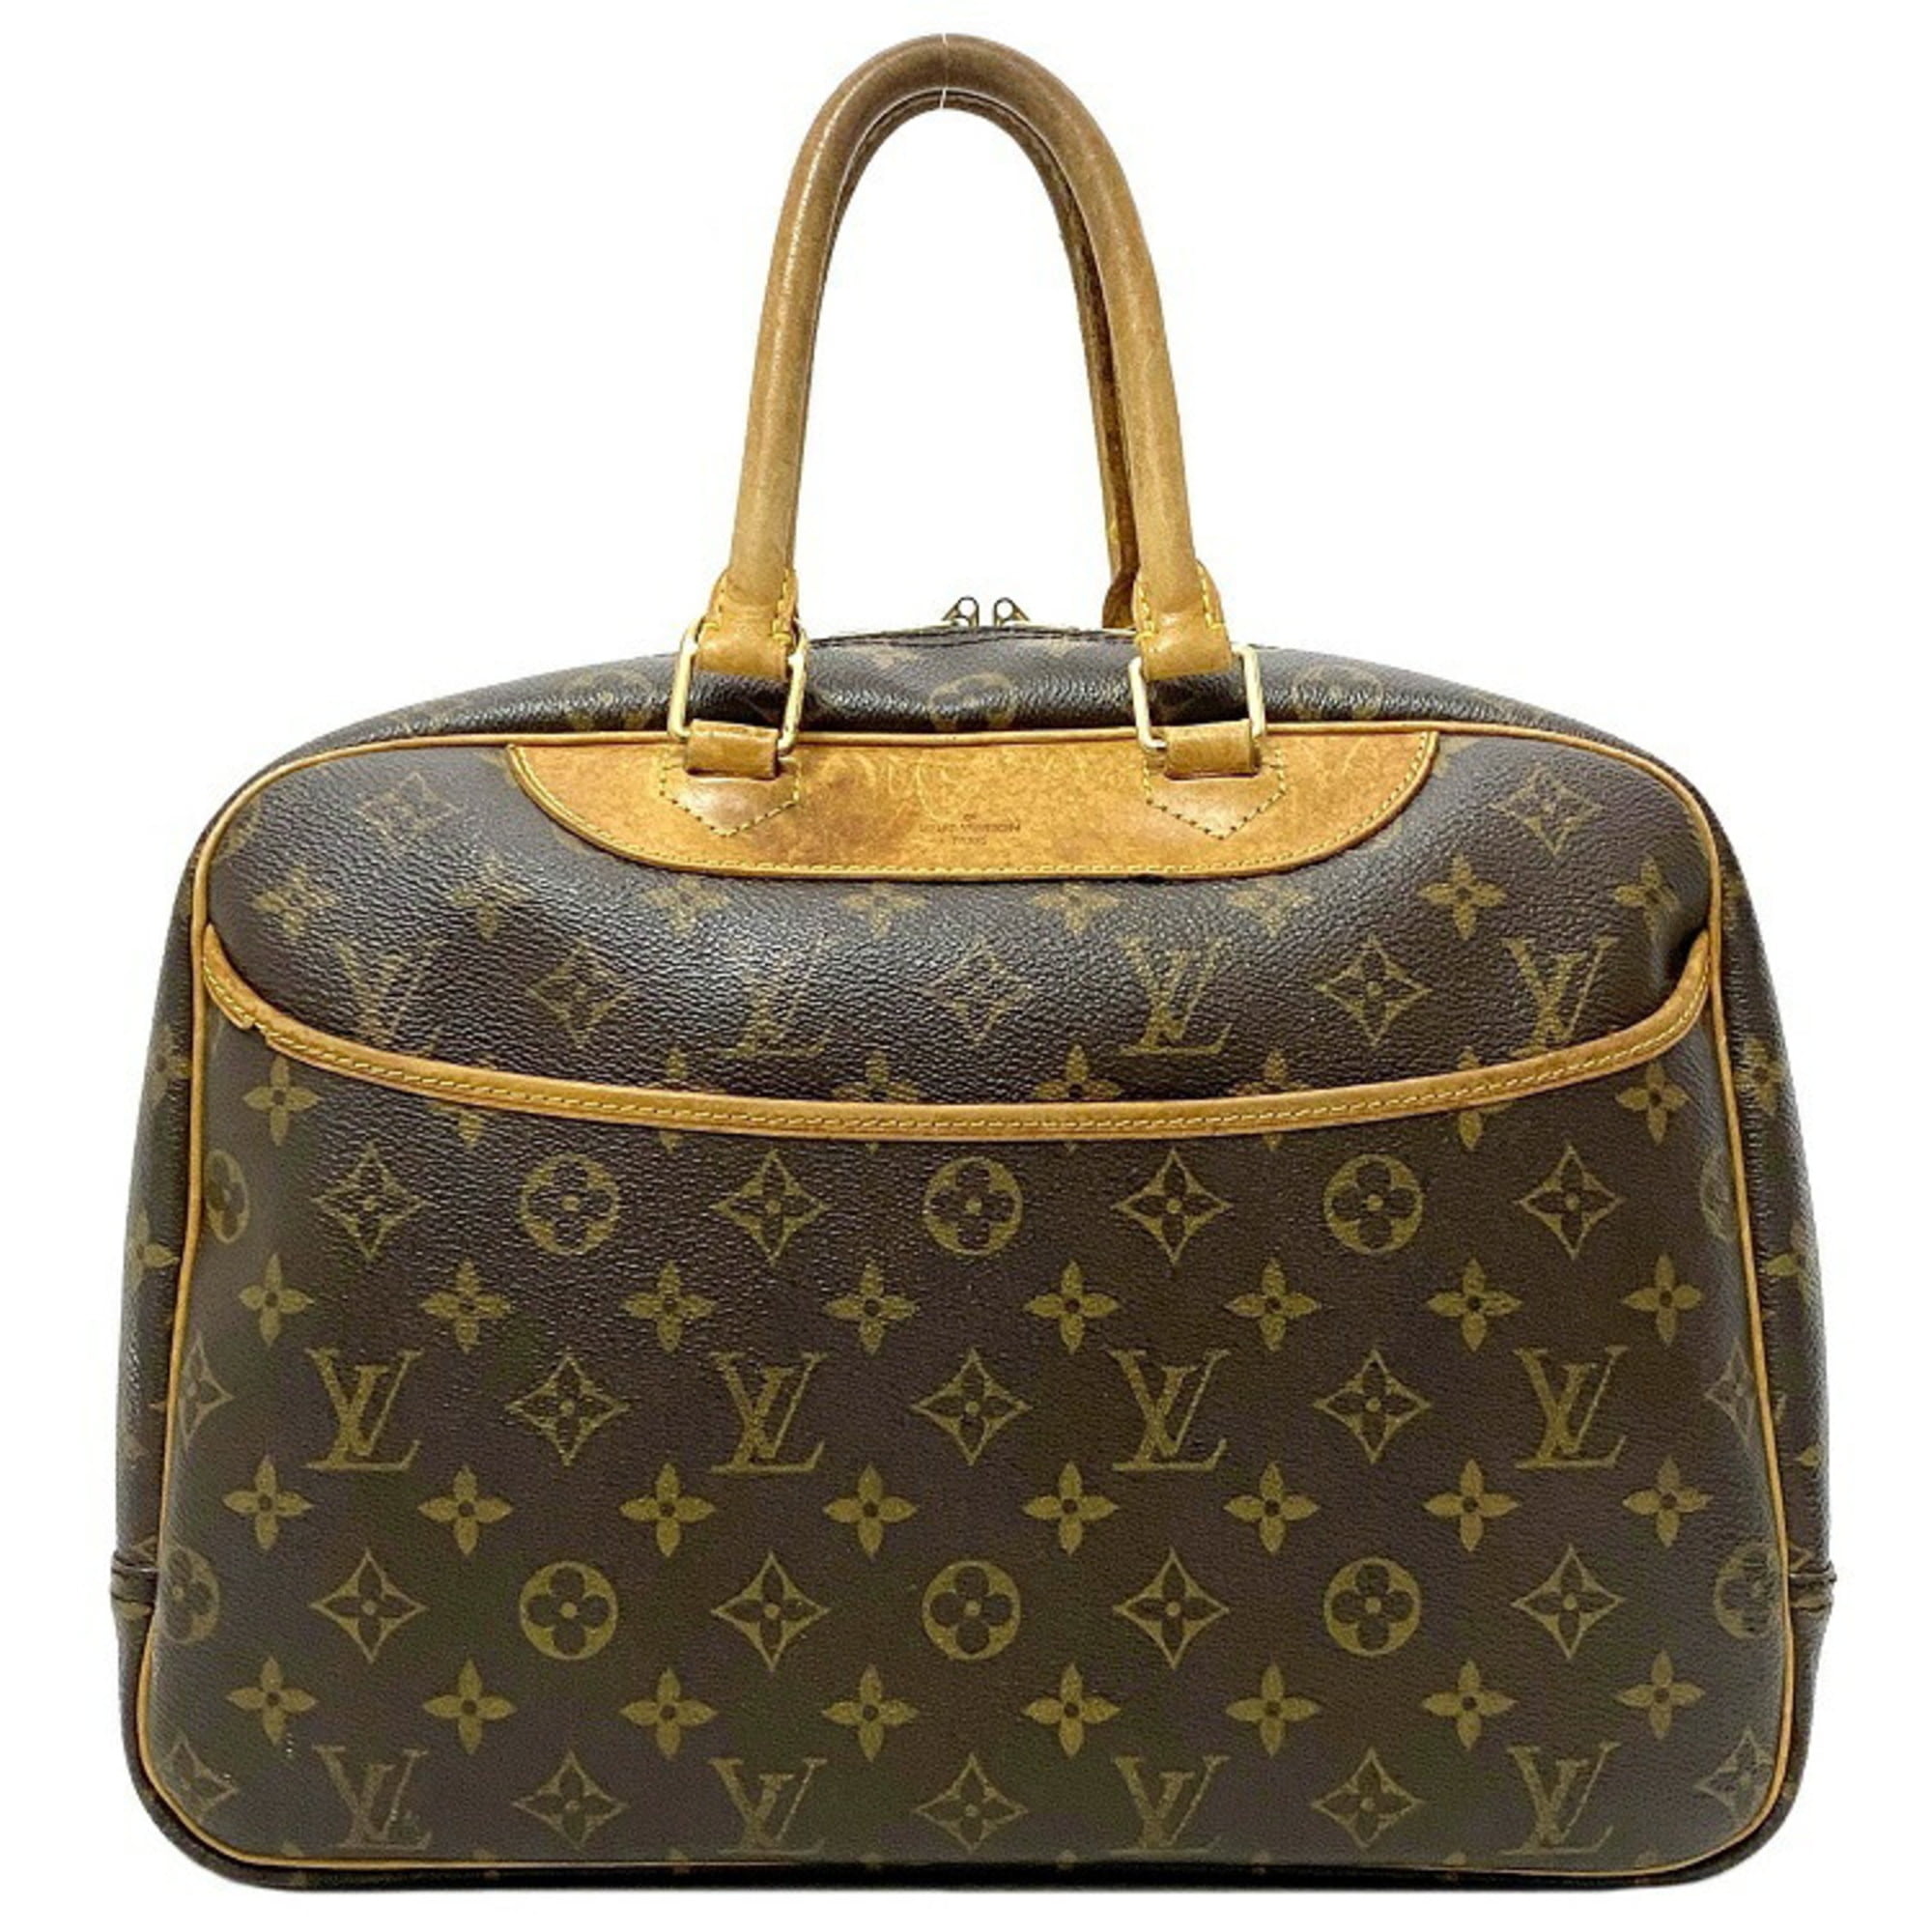 Louis Vuitton, Bags, Louis Vuitton Bowling Ball Bag Mint Condition